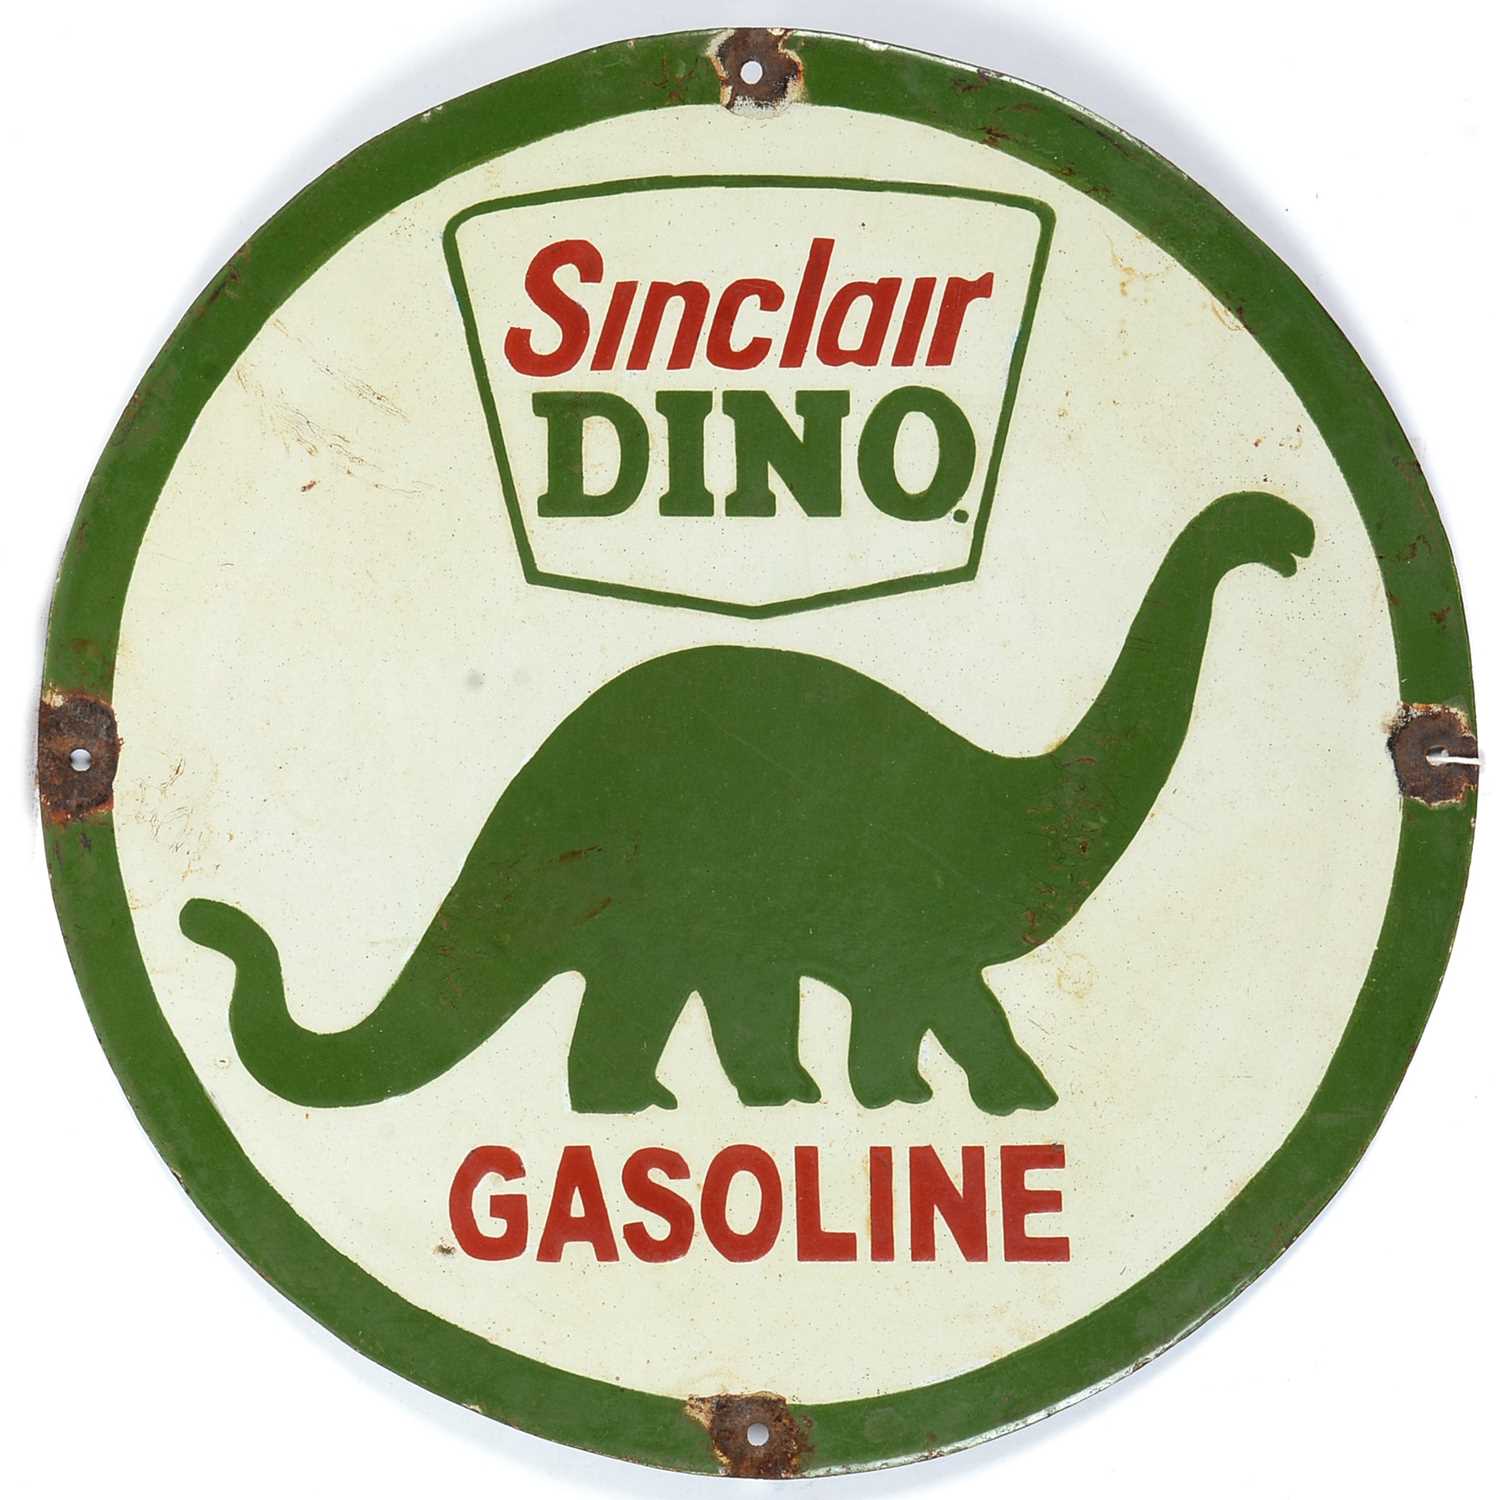 Sinclair Dino Gasoline enamel advertising sign, - Image 2 of 3